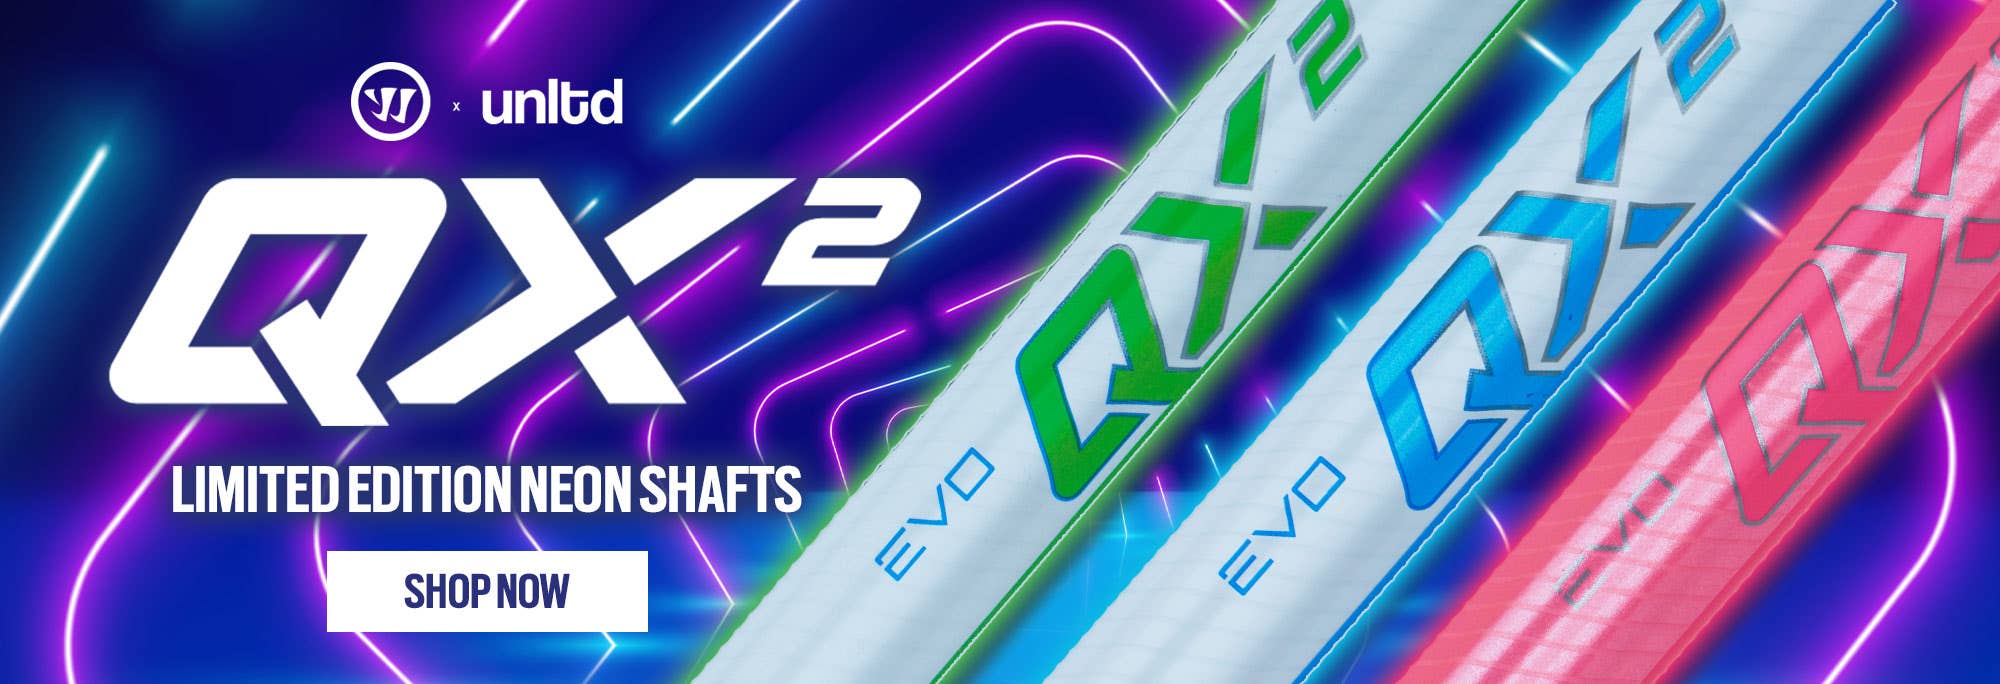 Warrior Evo QX2 Neon Lacrosse Shafts